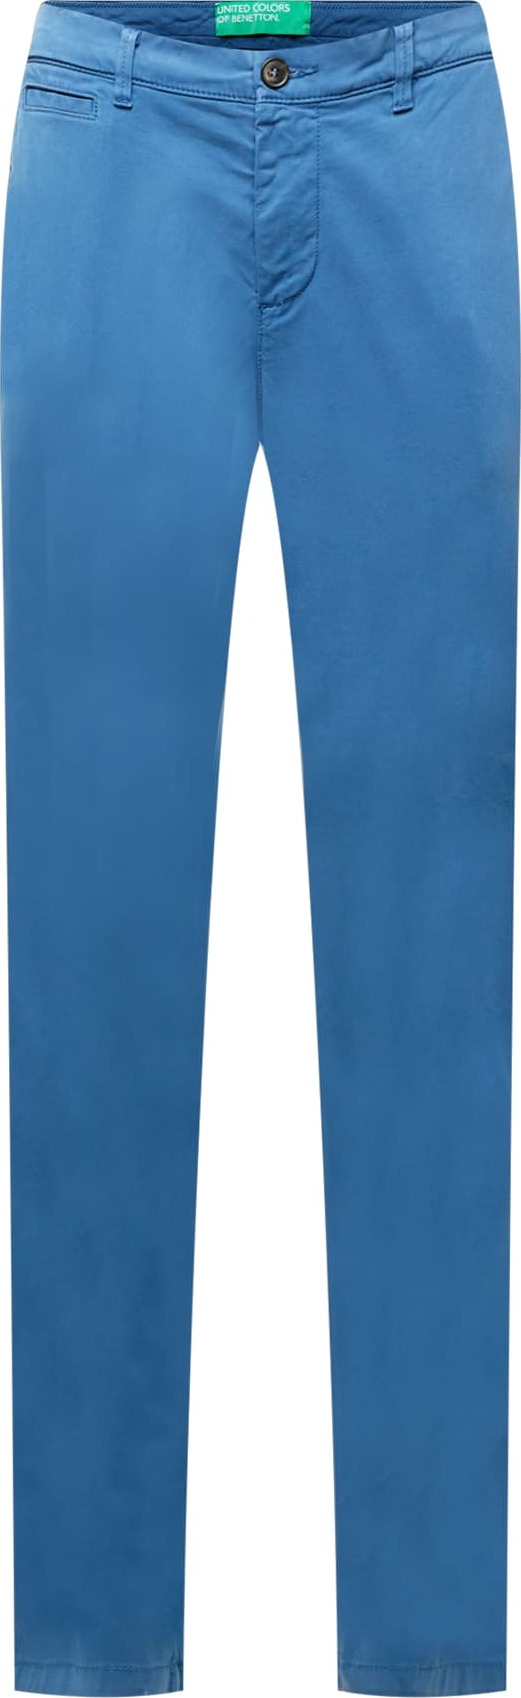 UNITED COLORS OF BENETTON Chino kalhoty modrá